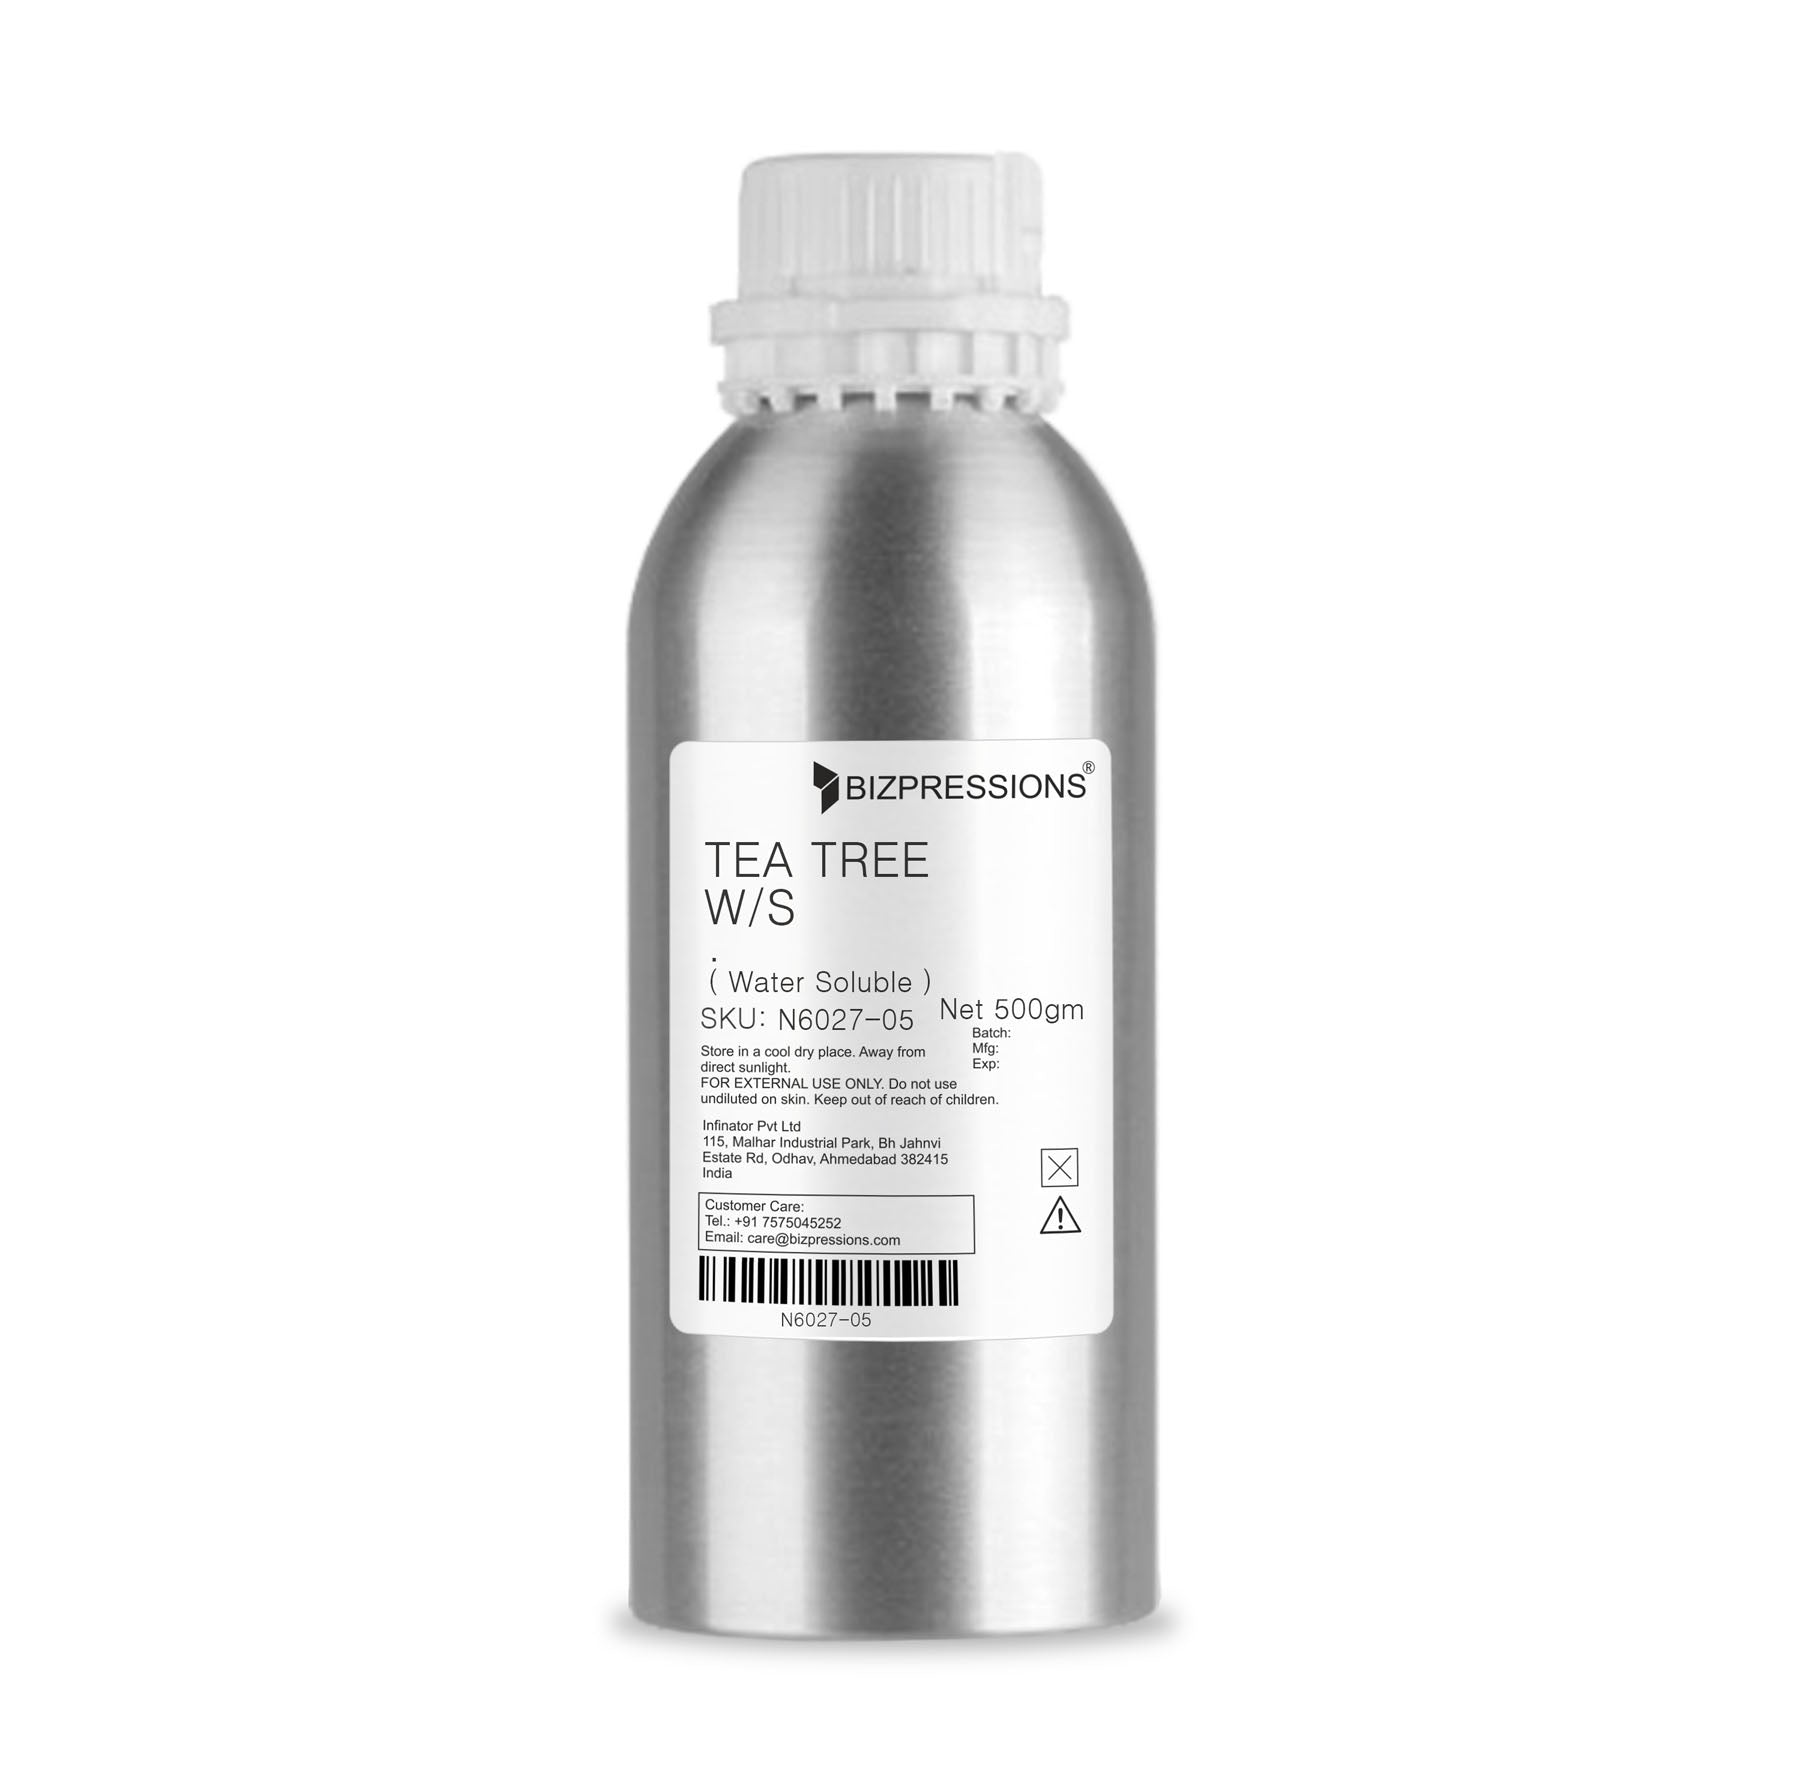 TEA TREE W/S - Fragrance ( Water Soluble ) - 500 gm